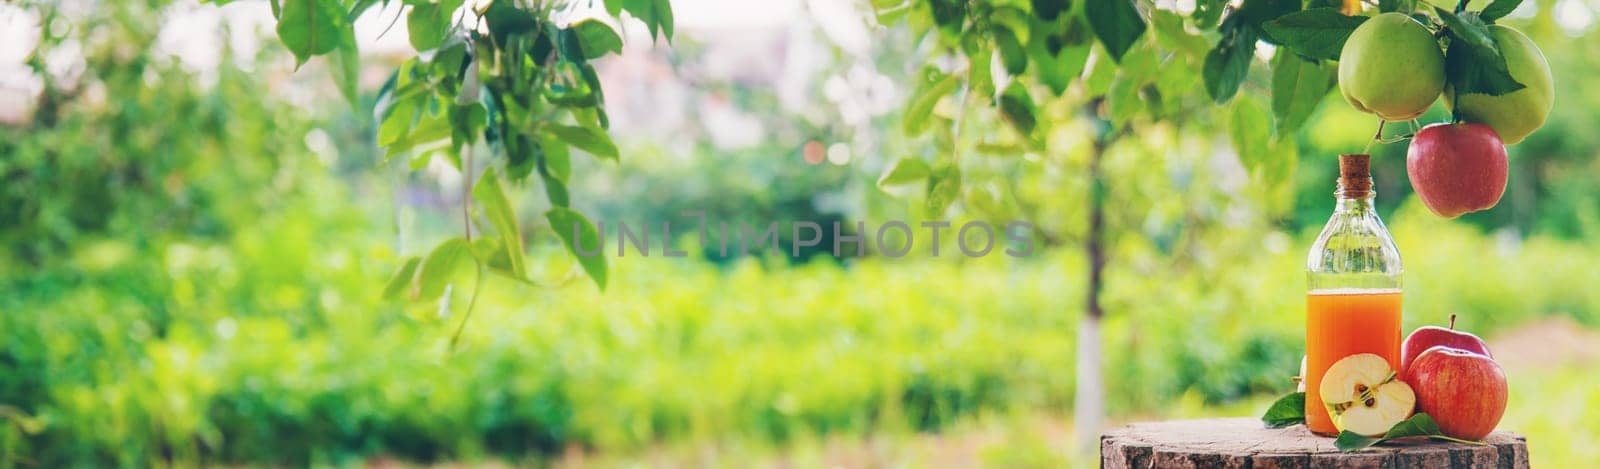 Apple cider vinegar in the garden. Selective focus. by yanadjana